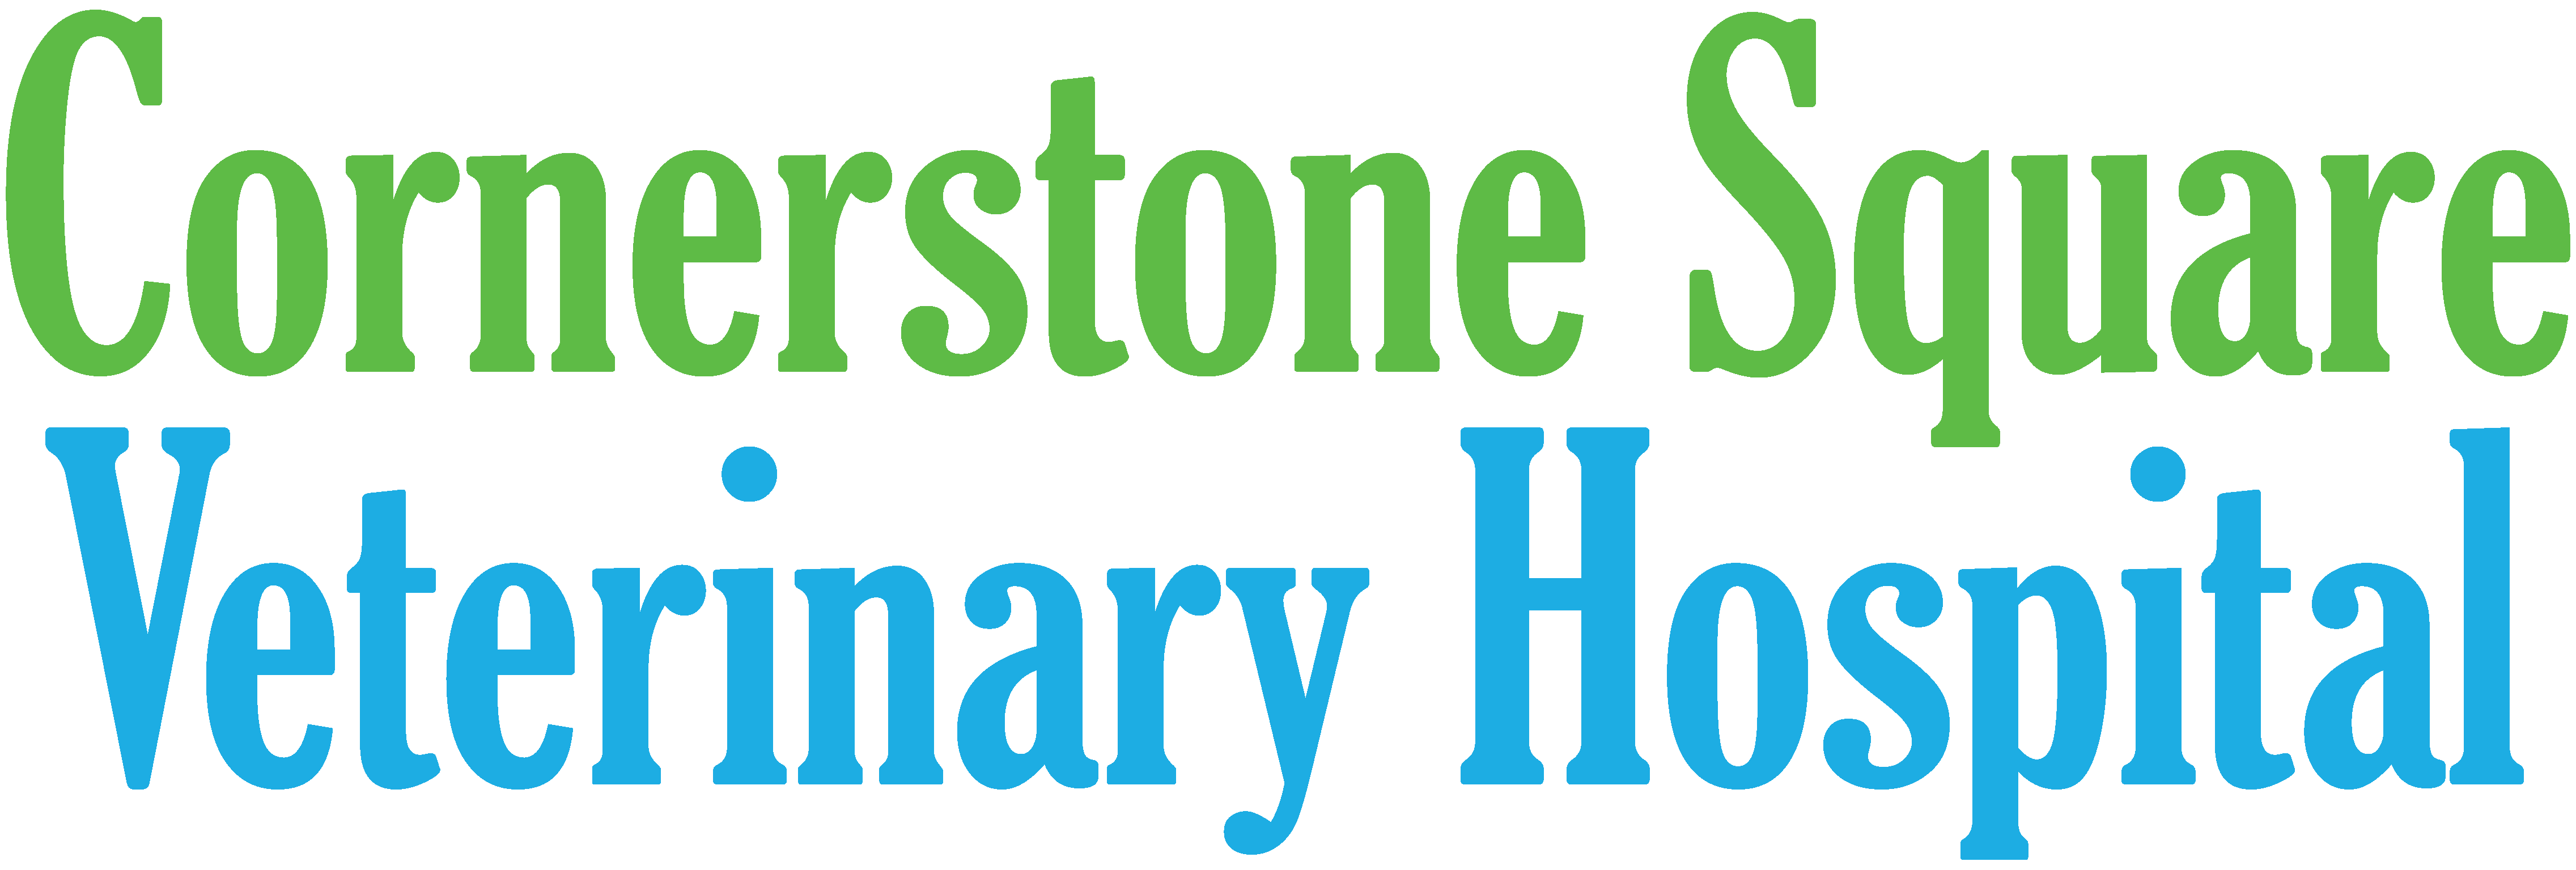 Logo of Cornerstone Square Veterinary Hospital in Calgary, AB